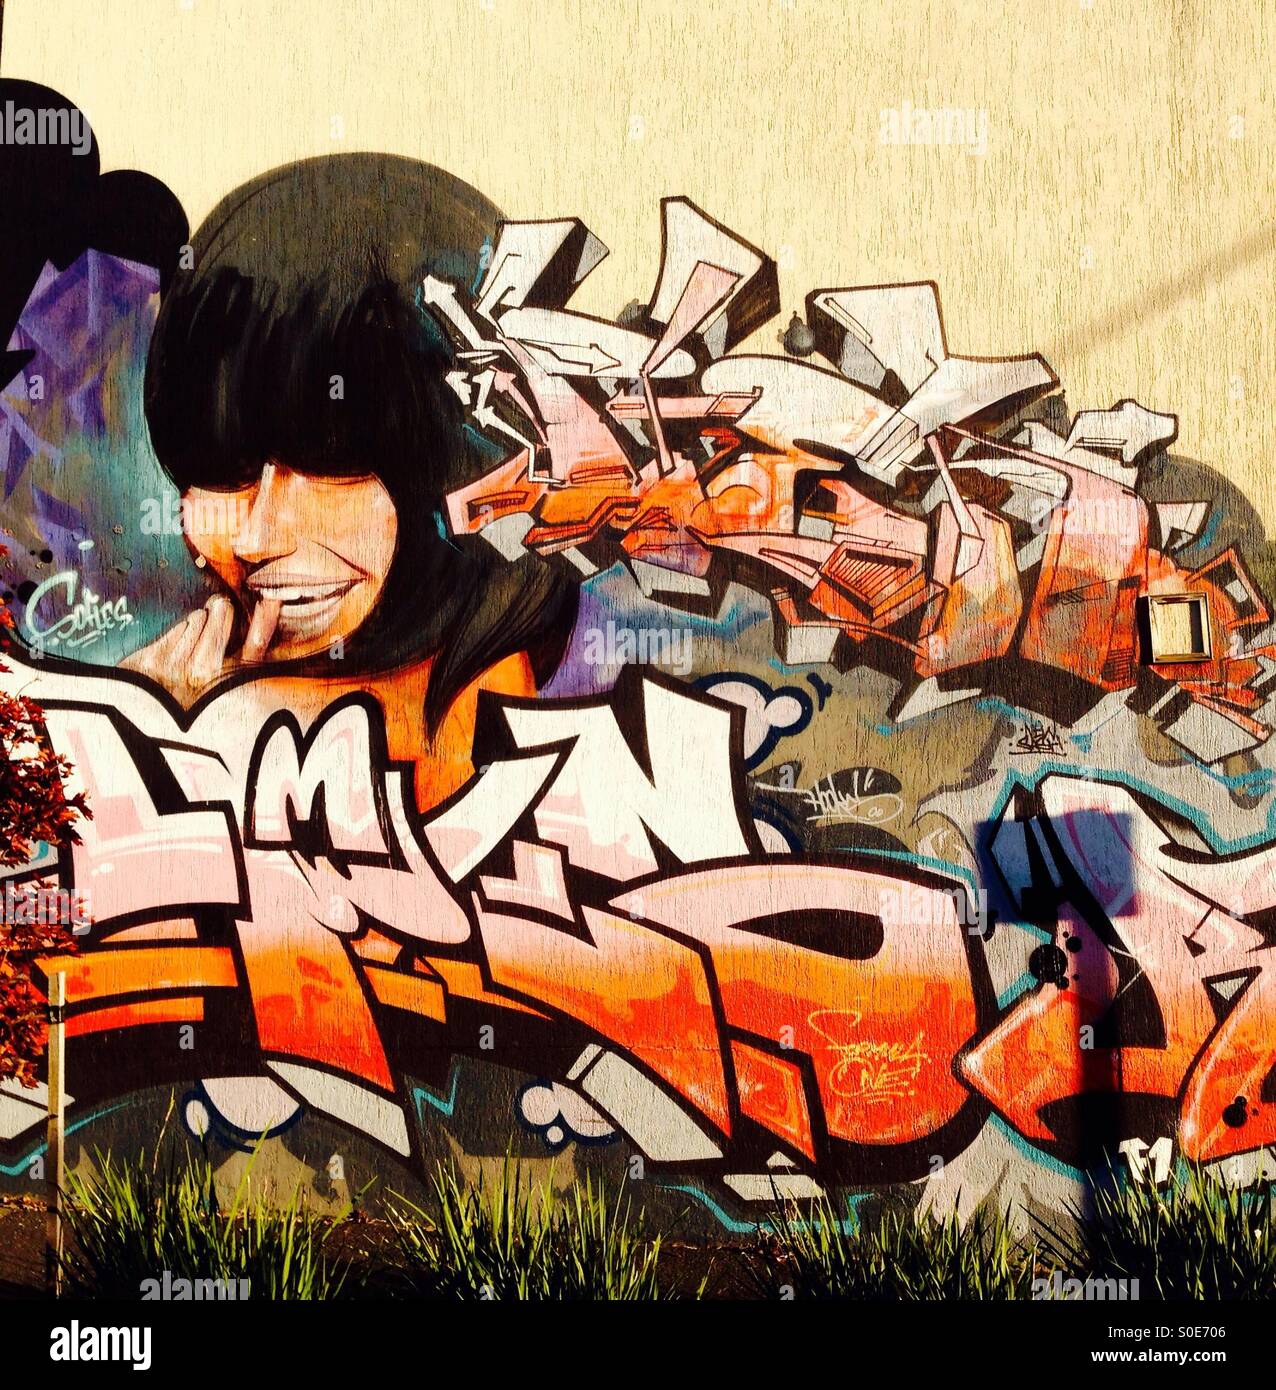 Street art of girl & graffiti Stock Photo